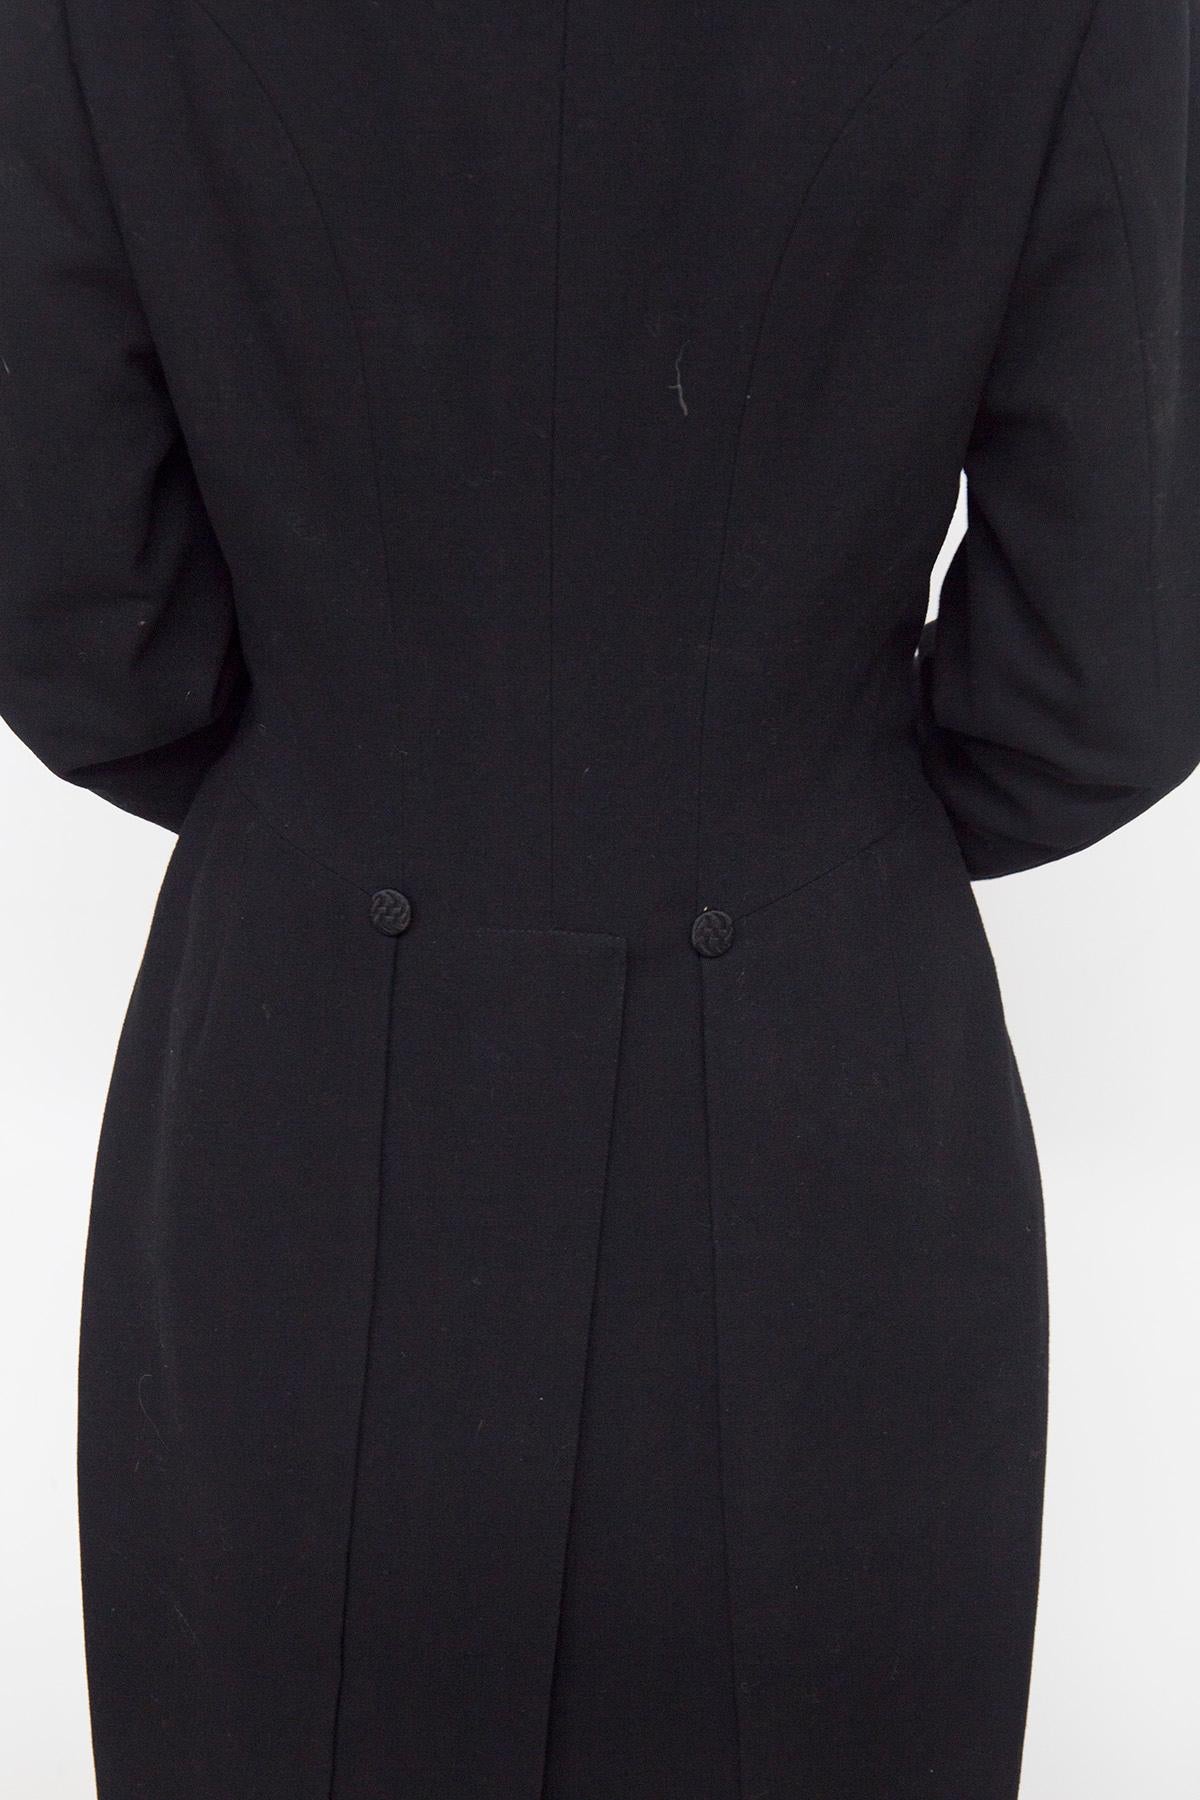 Very Elegant Vintage Black Tight Suit For Sale 2